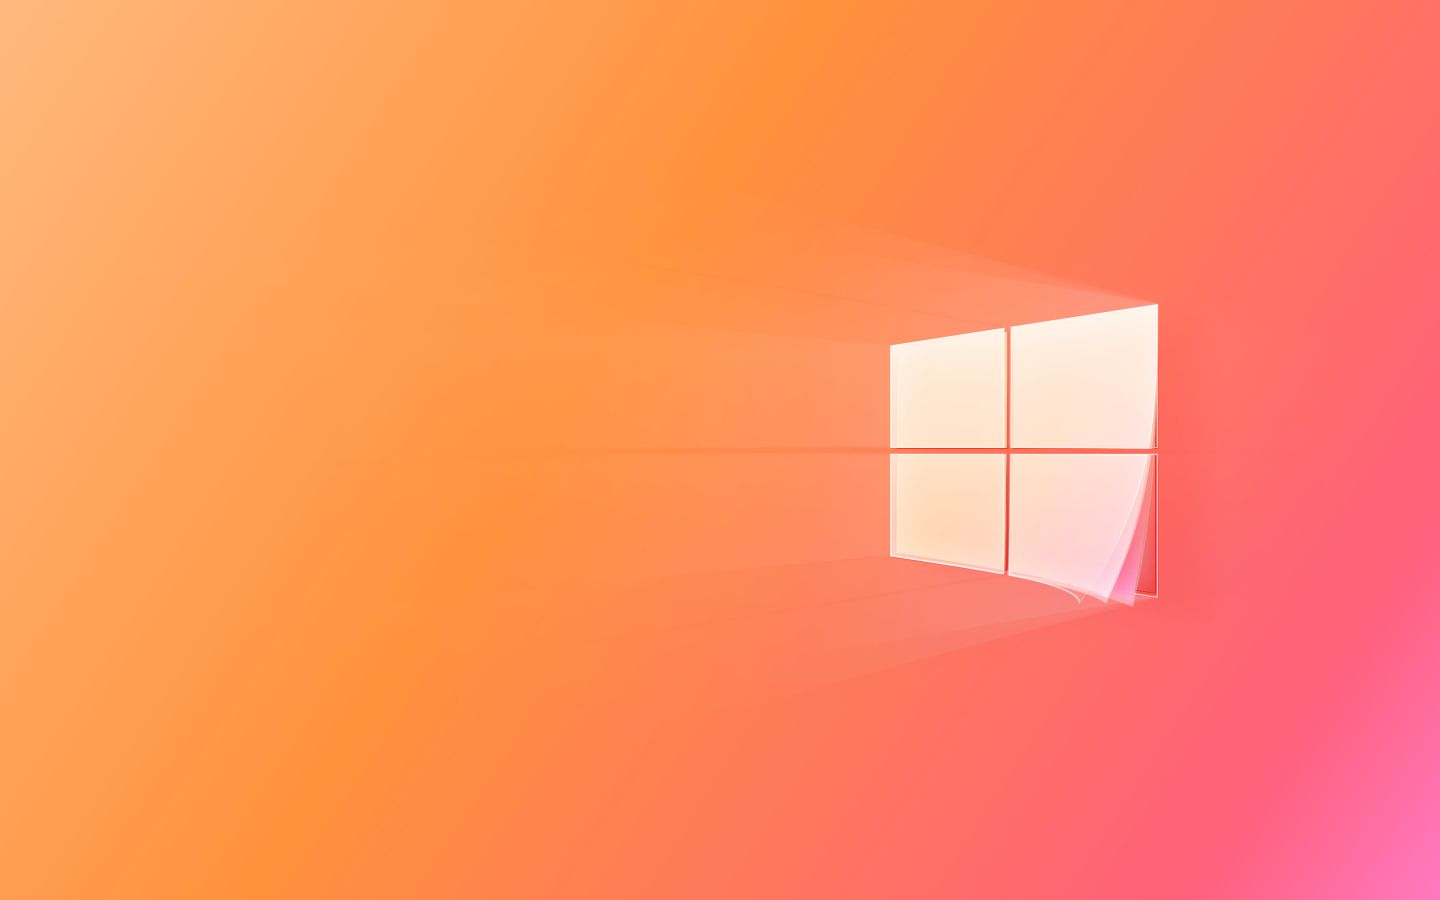 49+] Windows 10 Wallpaper 1440x900 - WallpaperSafari